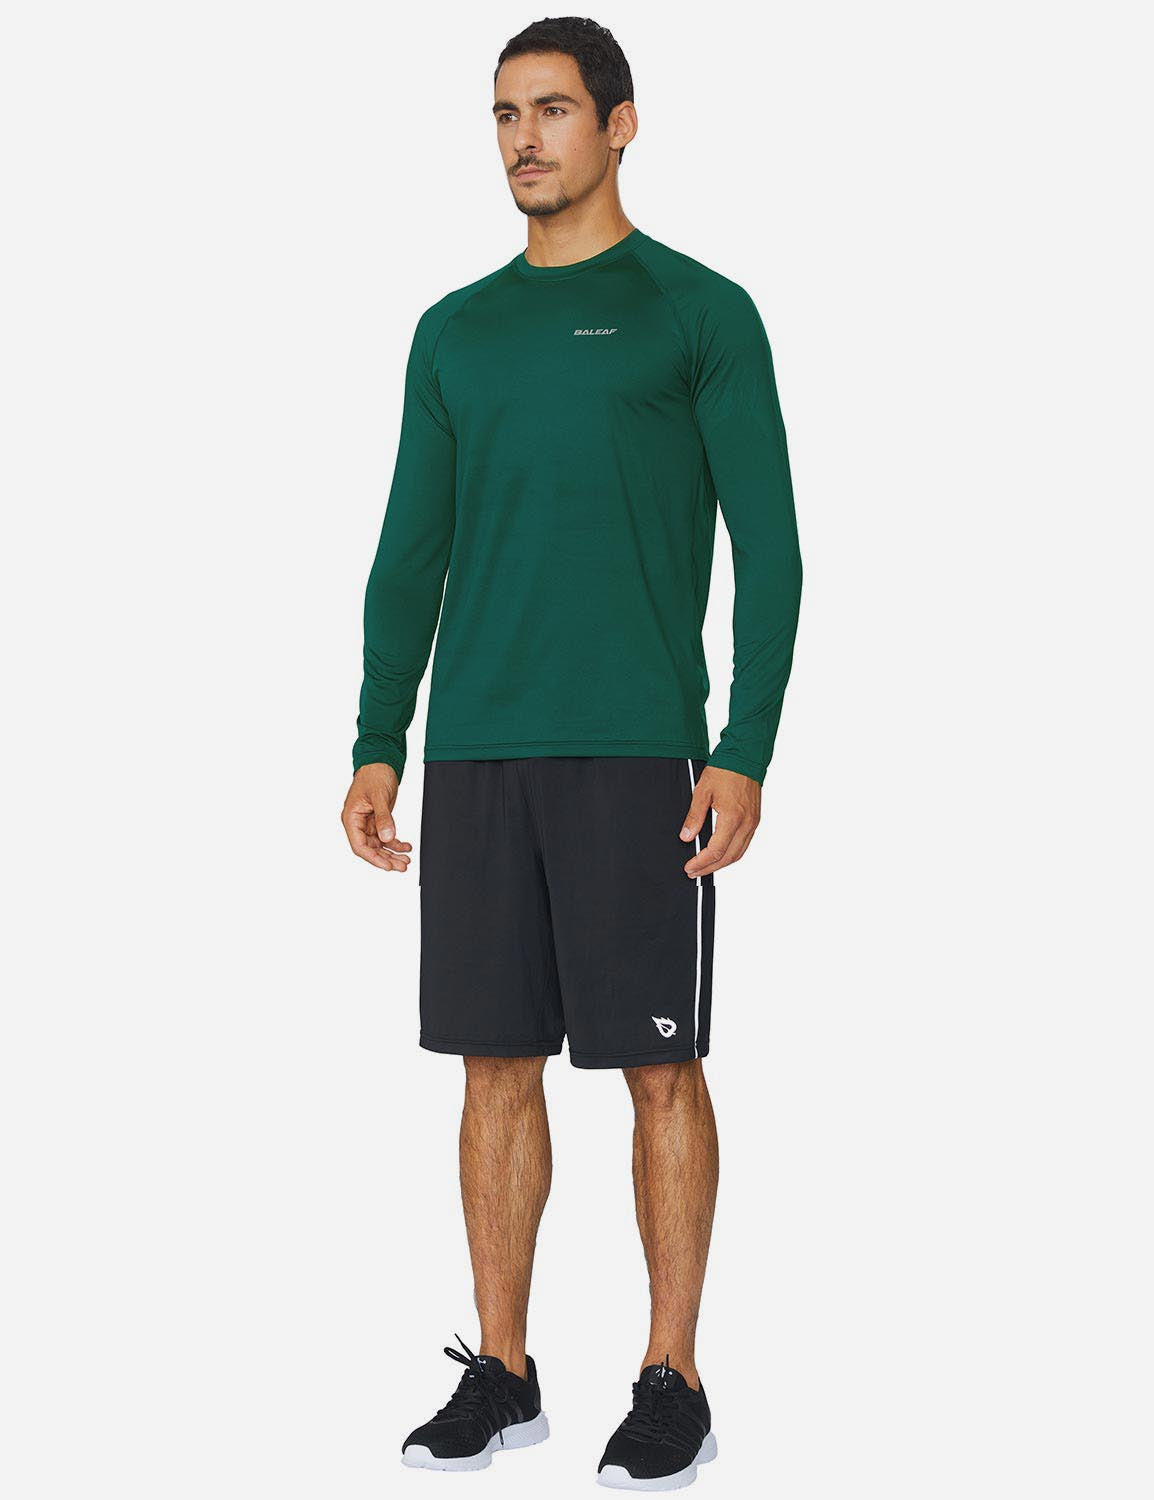 Baleaf Men's Workout Crew-Neck Slim-Cut Long Sleeved Shirt abd195 Dark Green Full